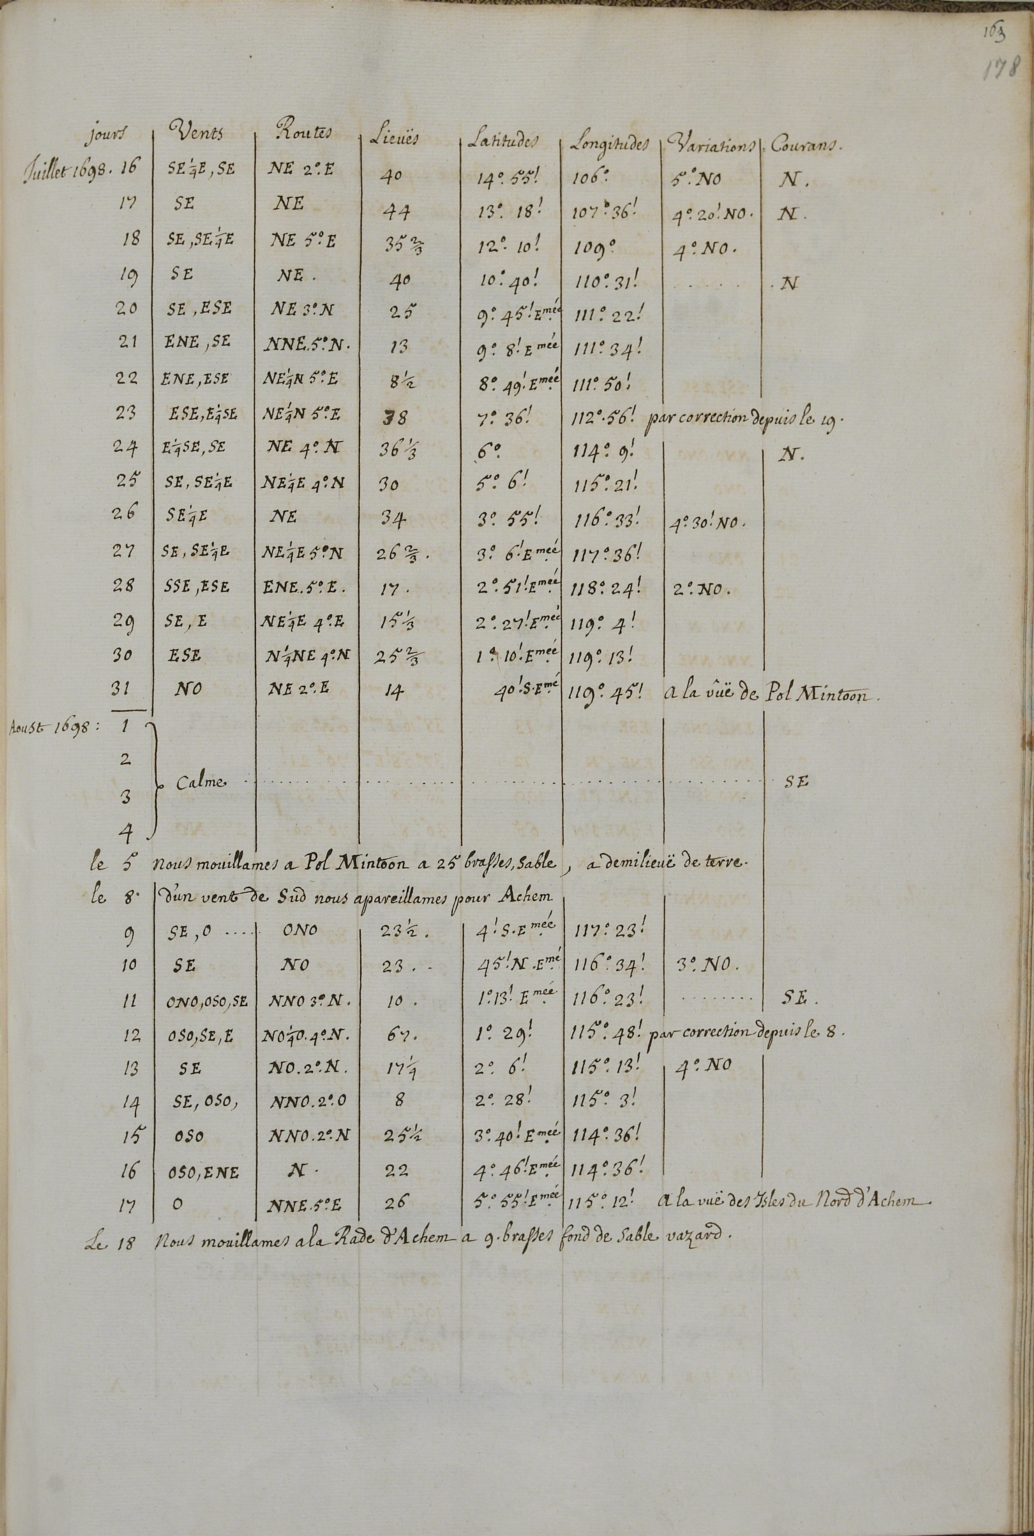 [Table of jours, vents, routes, lieuës, latitudes, longitudes, variantions and courans, Juillet and Aoust 1698]